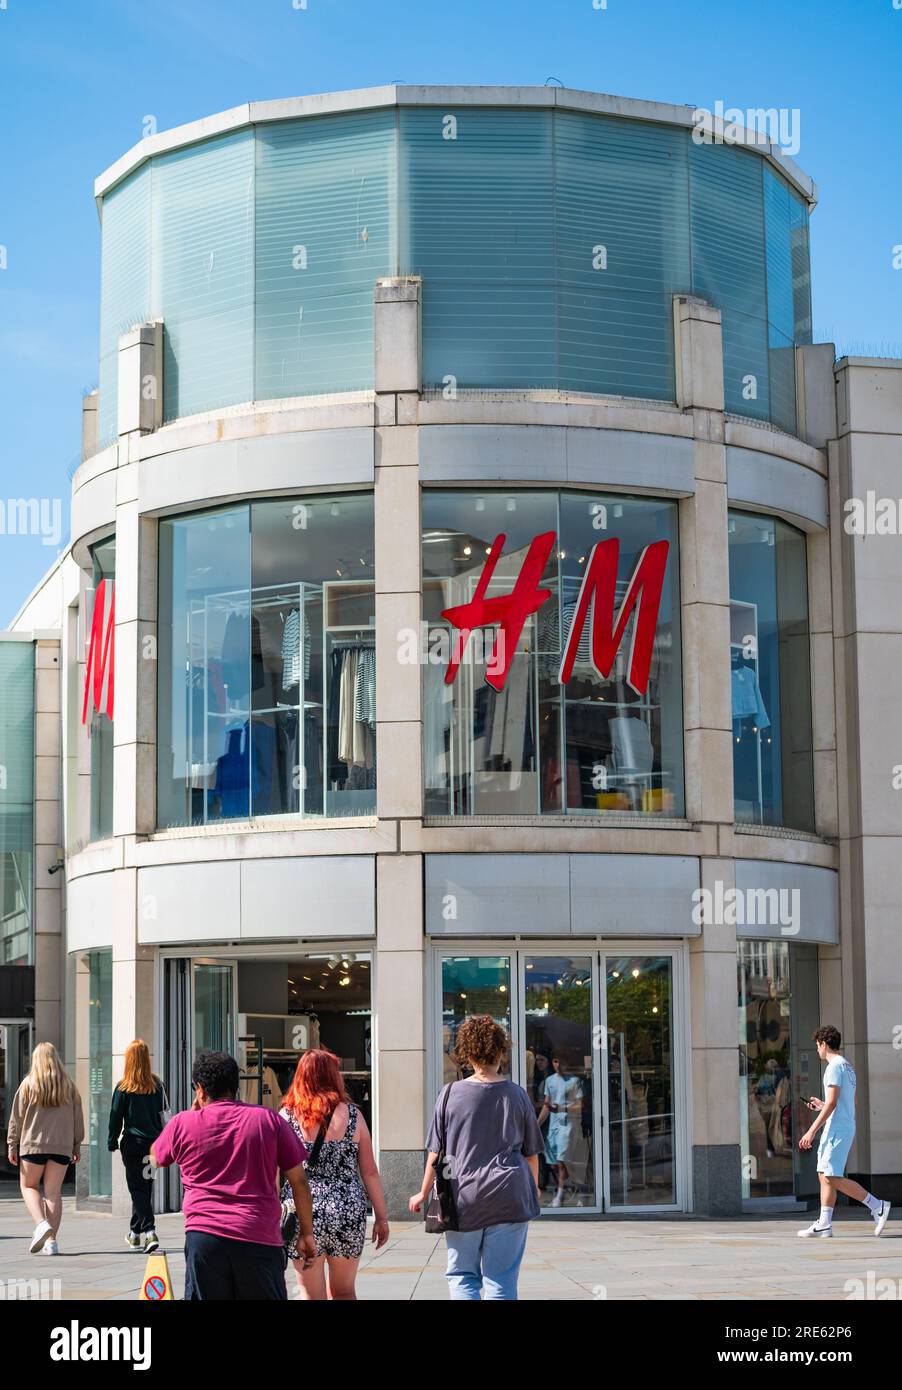 H & M store, Berwick Upon Tweed, Northumberland, UK, England, H&M